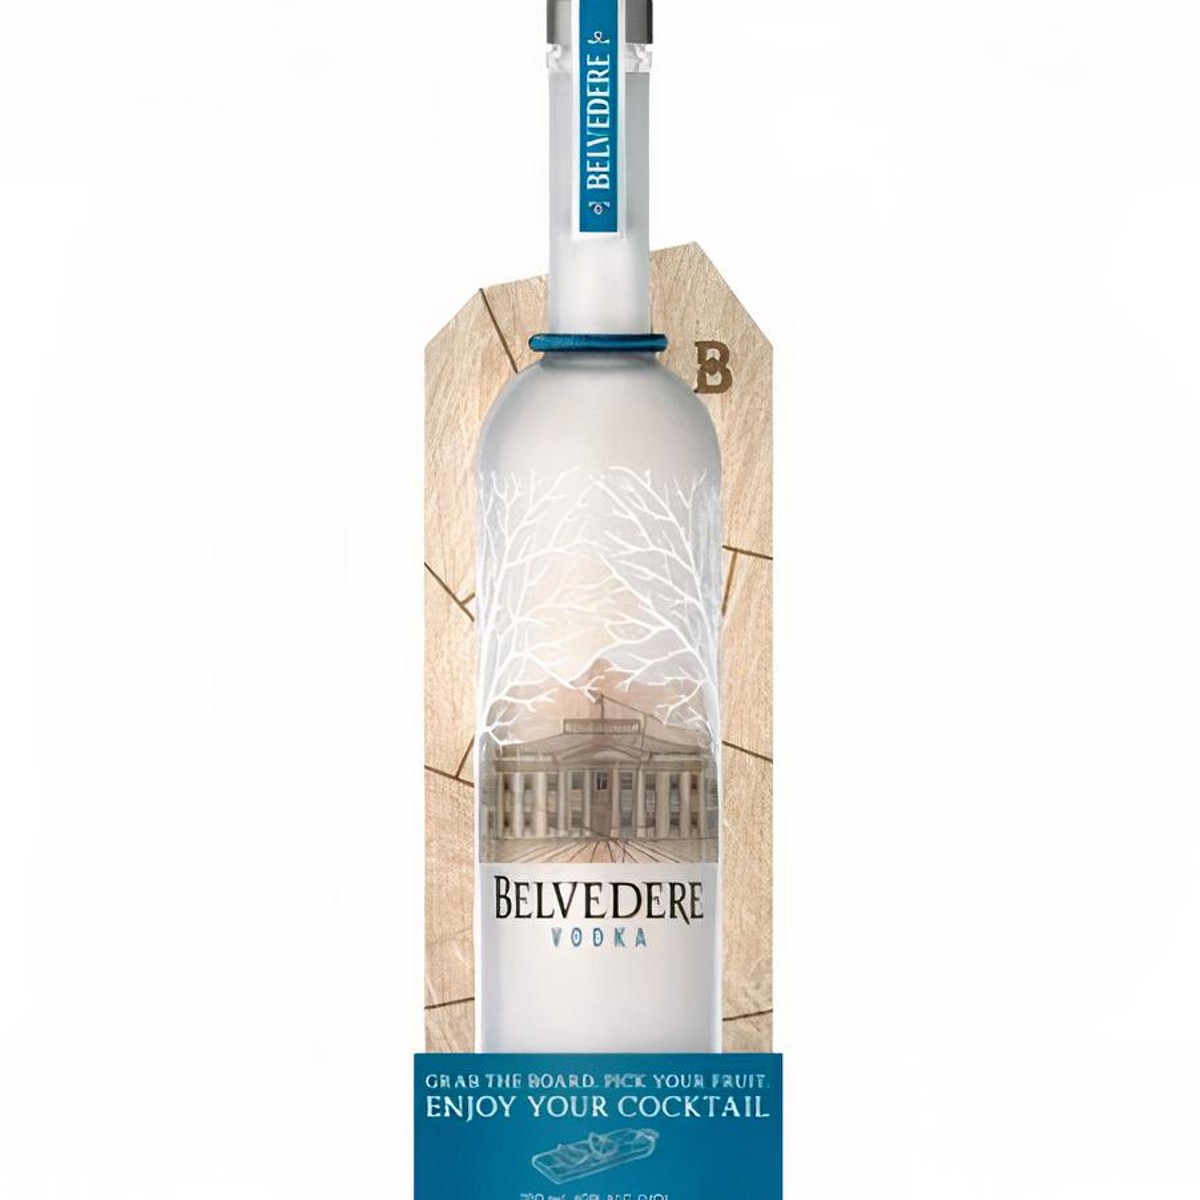 Belvedere Product Red John Legend Vodka 750ml